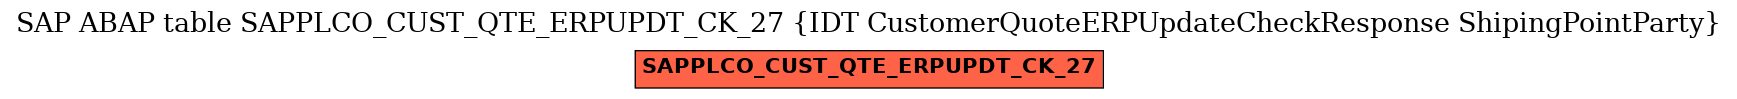 E-R Diagram for table SAPPLCO_CUST_QTE_ERPUPDT_CK_27 (IDT CustomerQuoteERPUpdateCheckResponse ShipingPointParty)